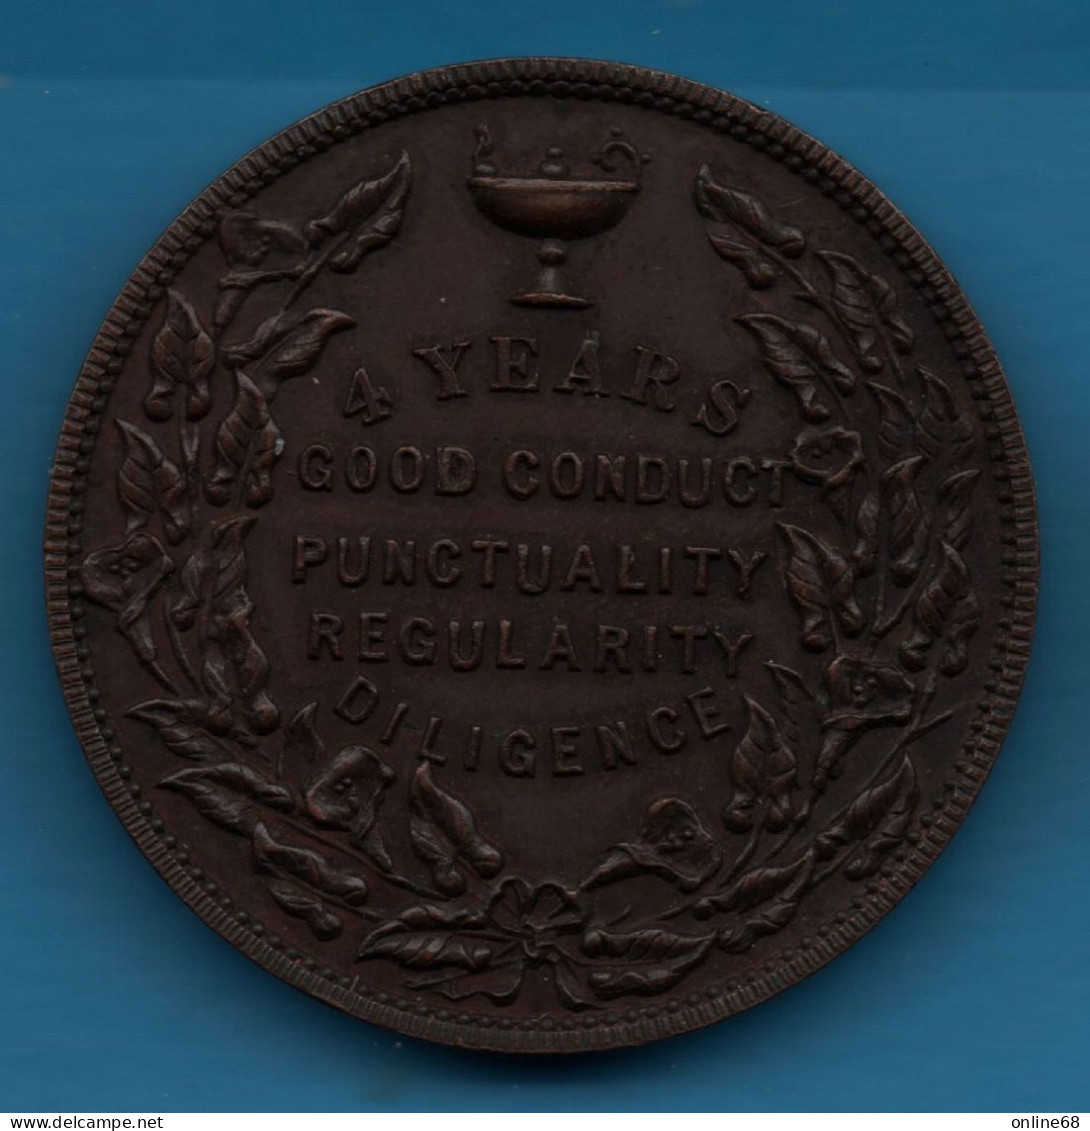 CANADA TORONTO PUBLIC SCHOOL BOARD 4 YEARS GOOD CONDUCT PUNCTUALITY REGULARITY DILIGENCE 1889 School Medal - Gewerbliche